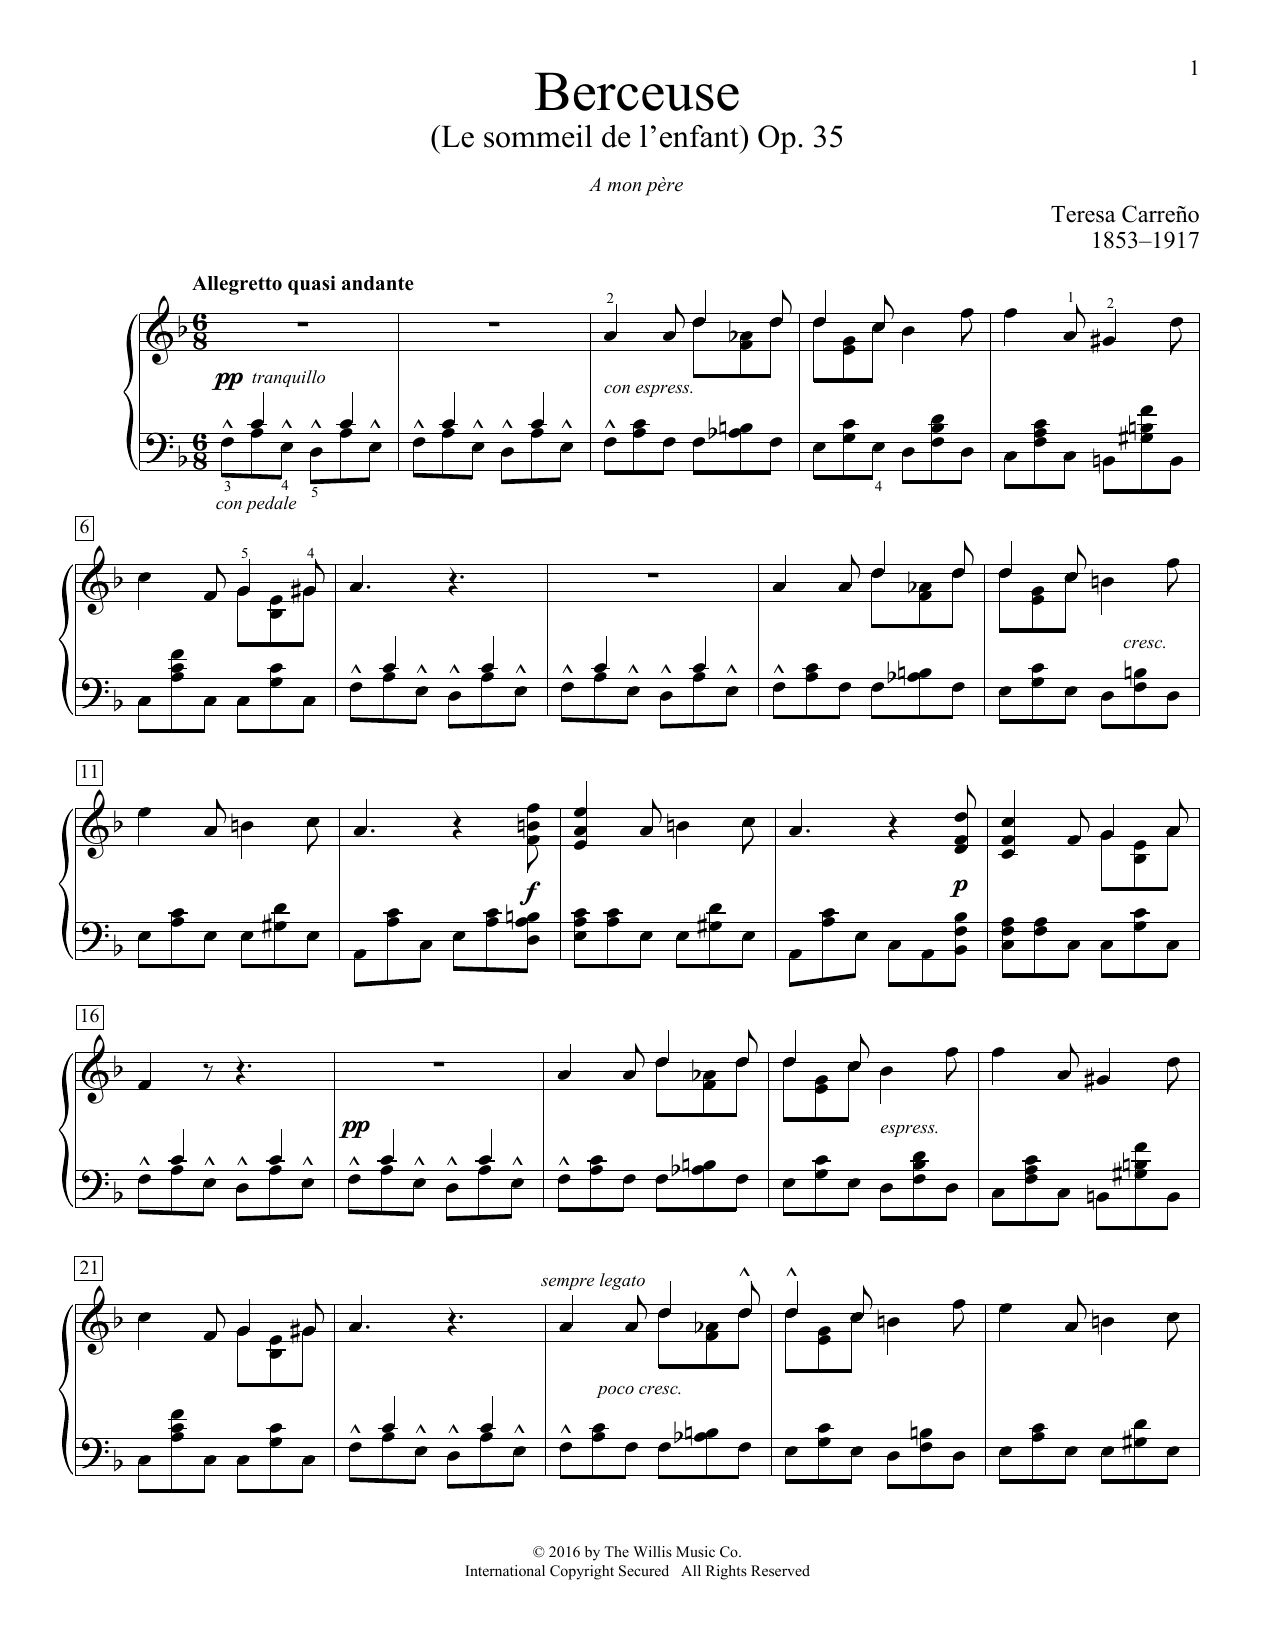 Teresa Carreno Berceuse (Le sommeil de l'enfant), Op. 35 sheet music notes and chords arranged for Educational Piano